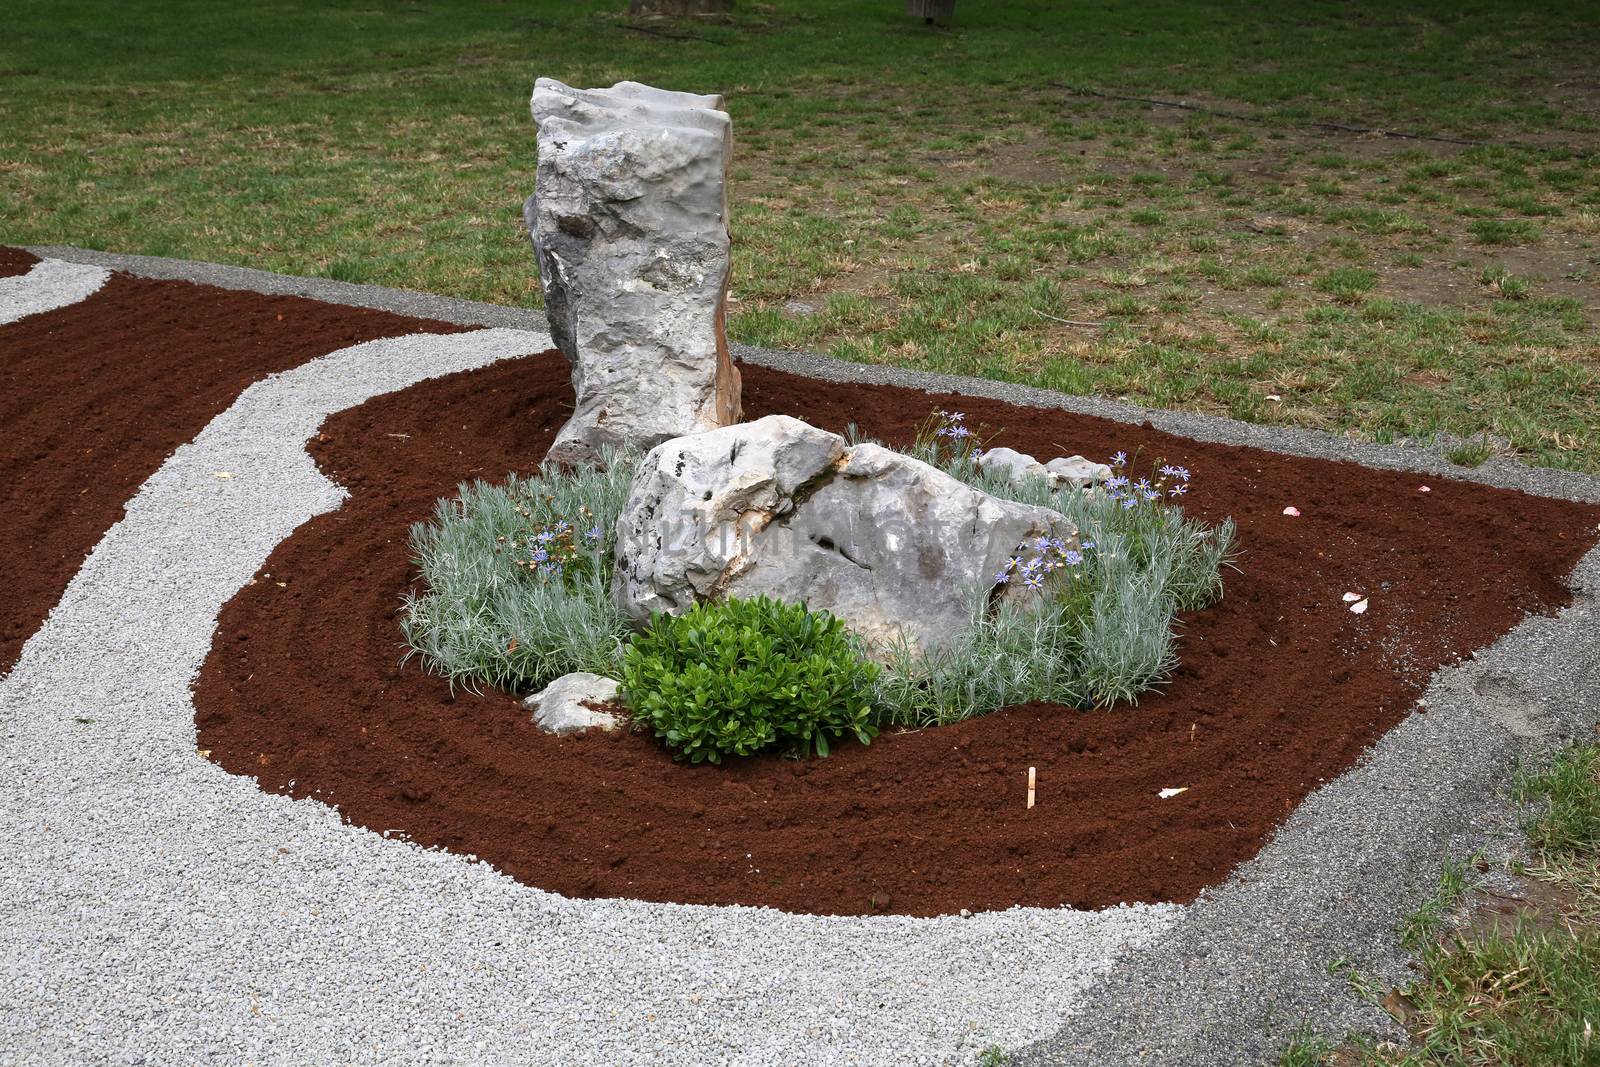 Flowers exposed on Floraart, 49 international garden exhibition in Zagreb, Croatia, on May 30, 2014.